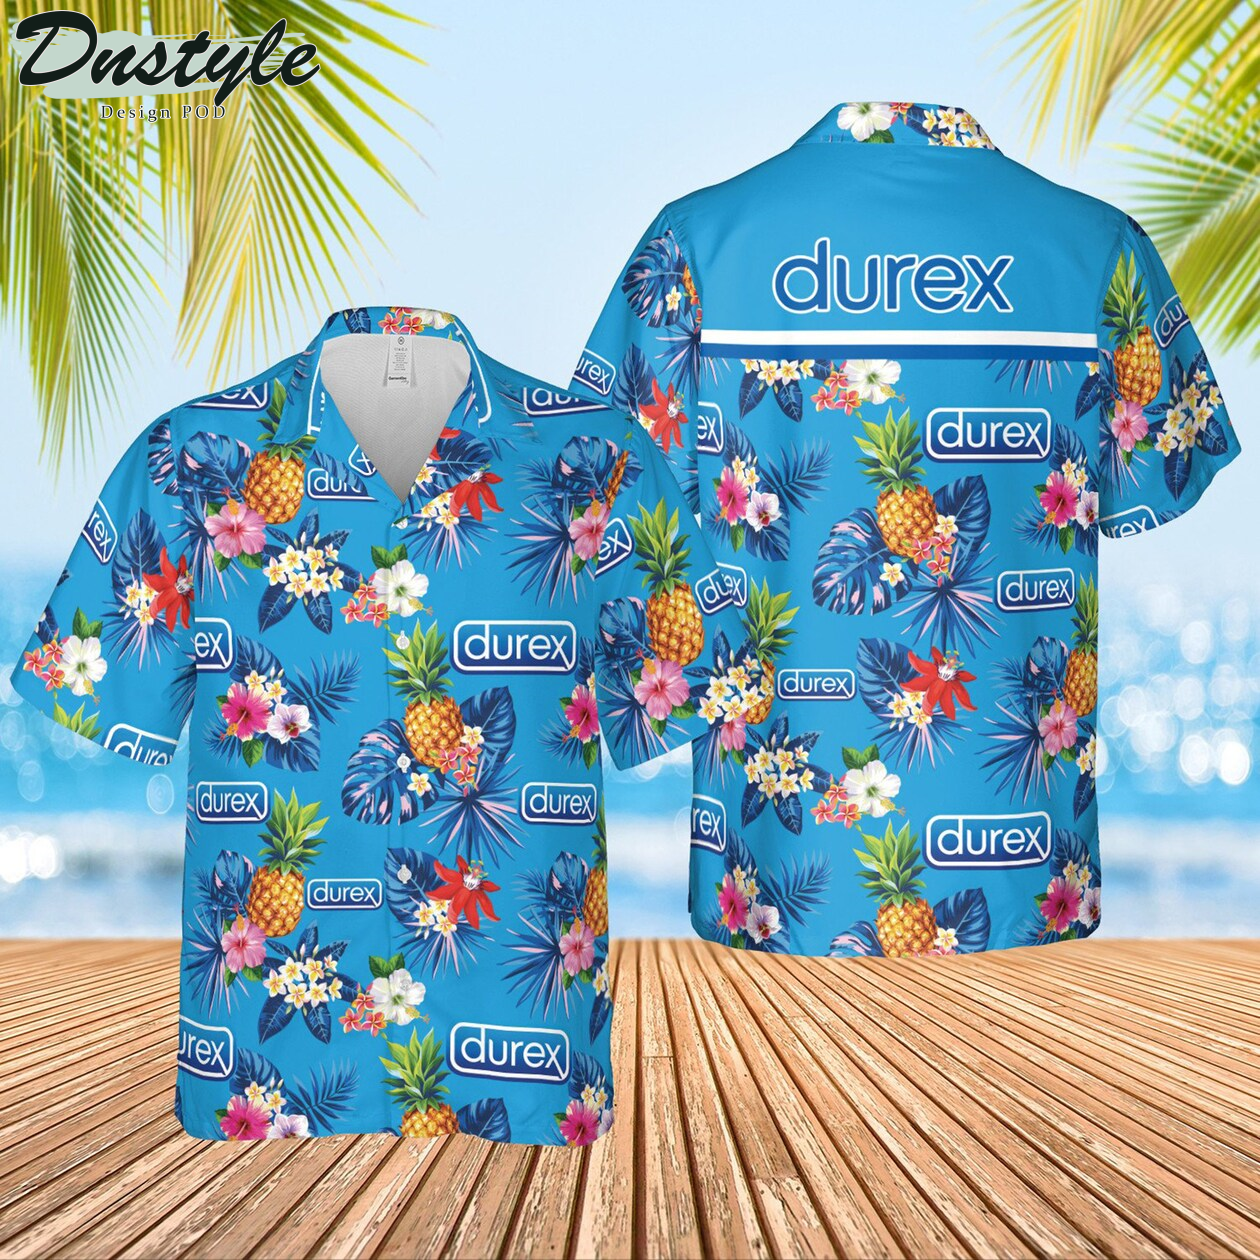 Durex Condoms Tropical Summer Hawaiian Shirt